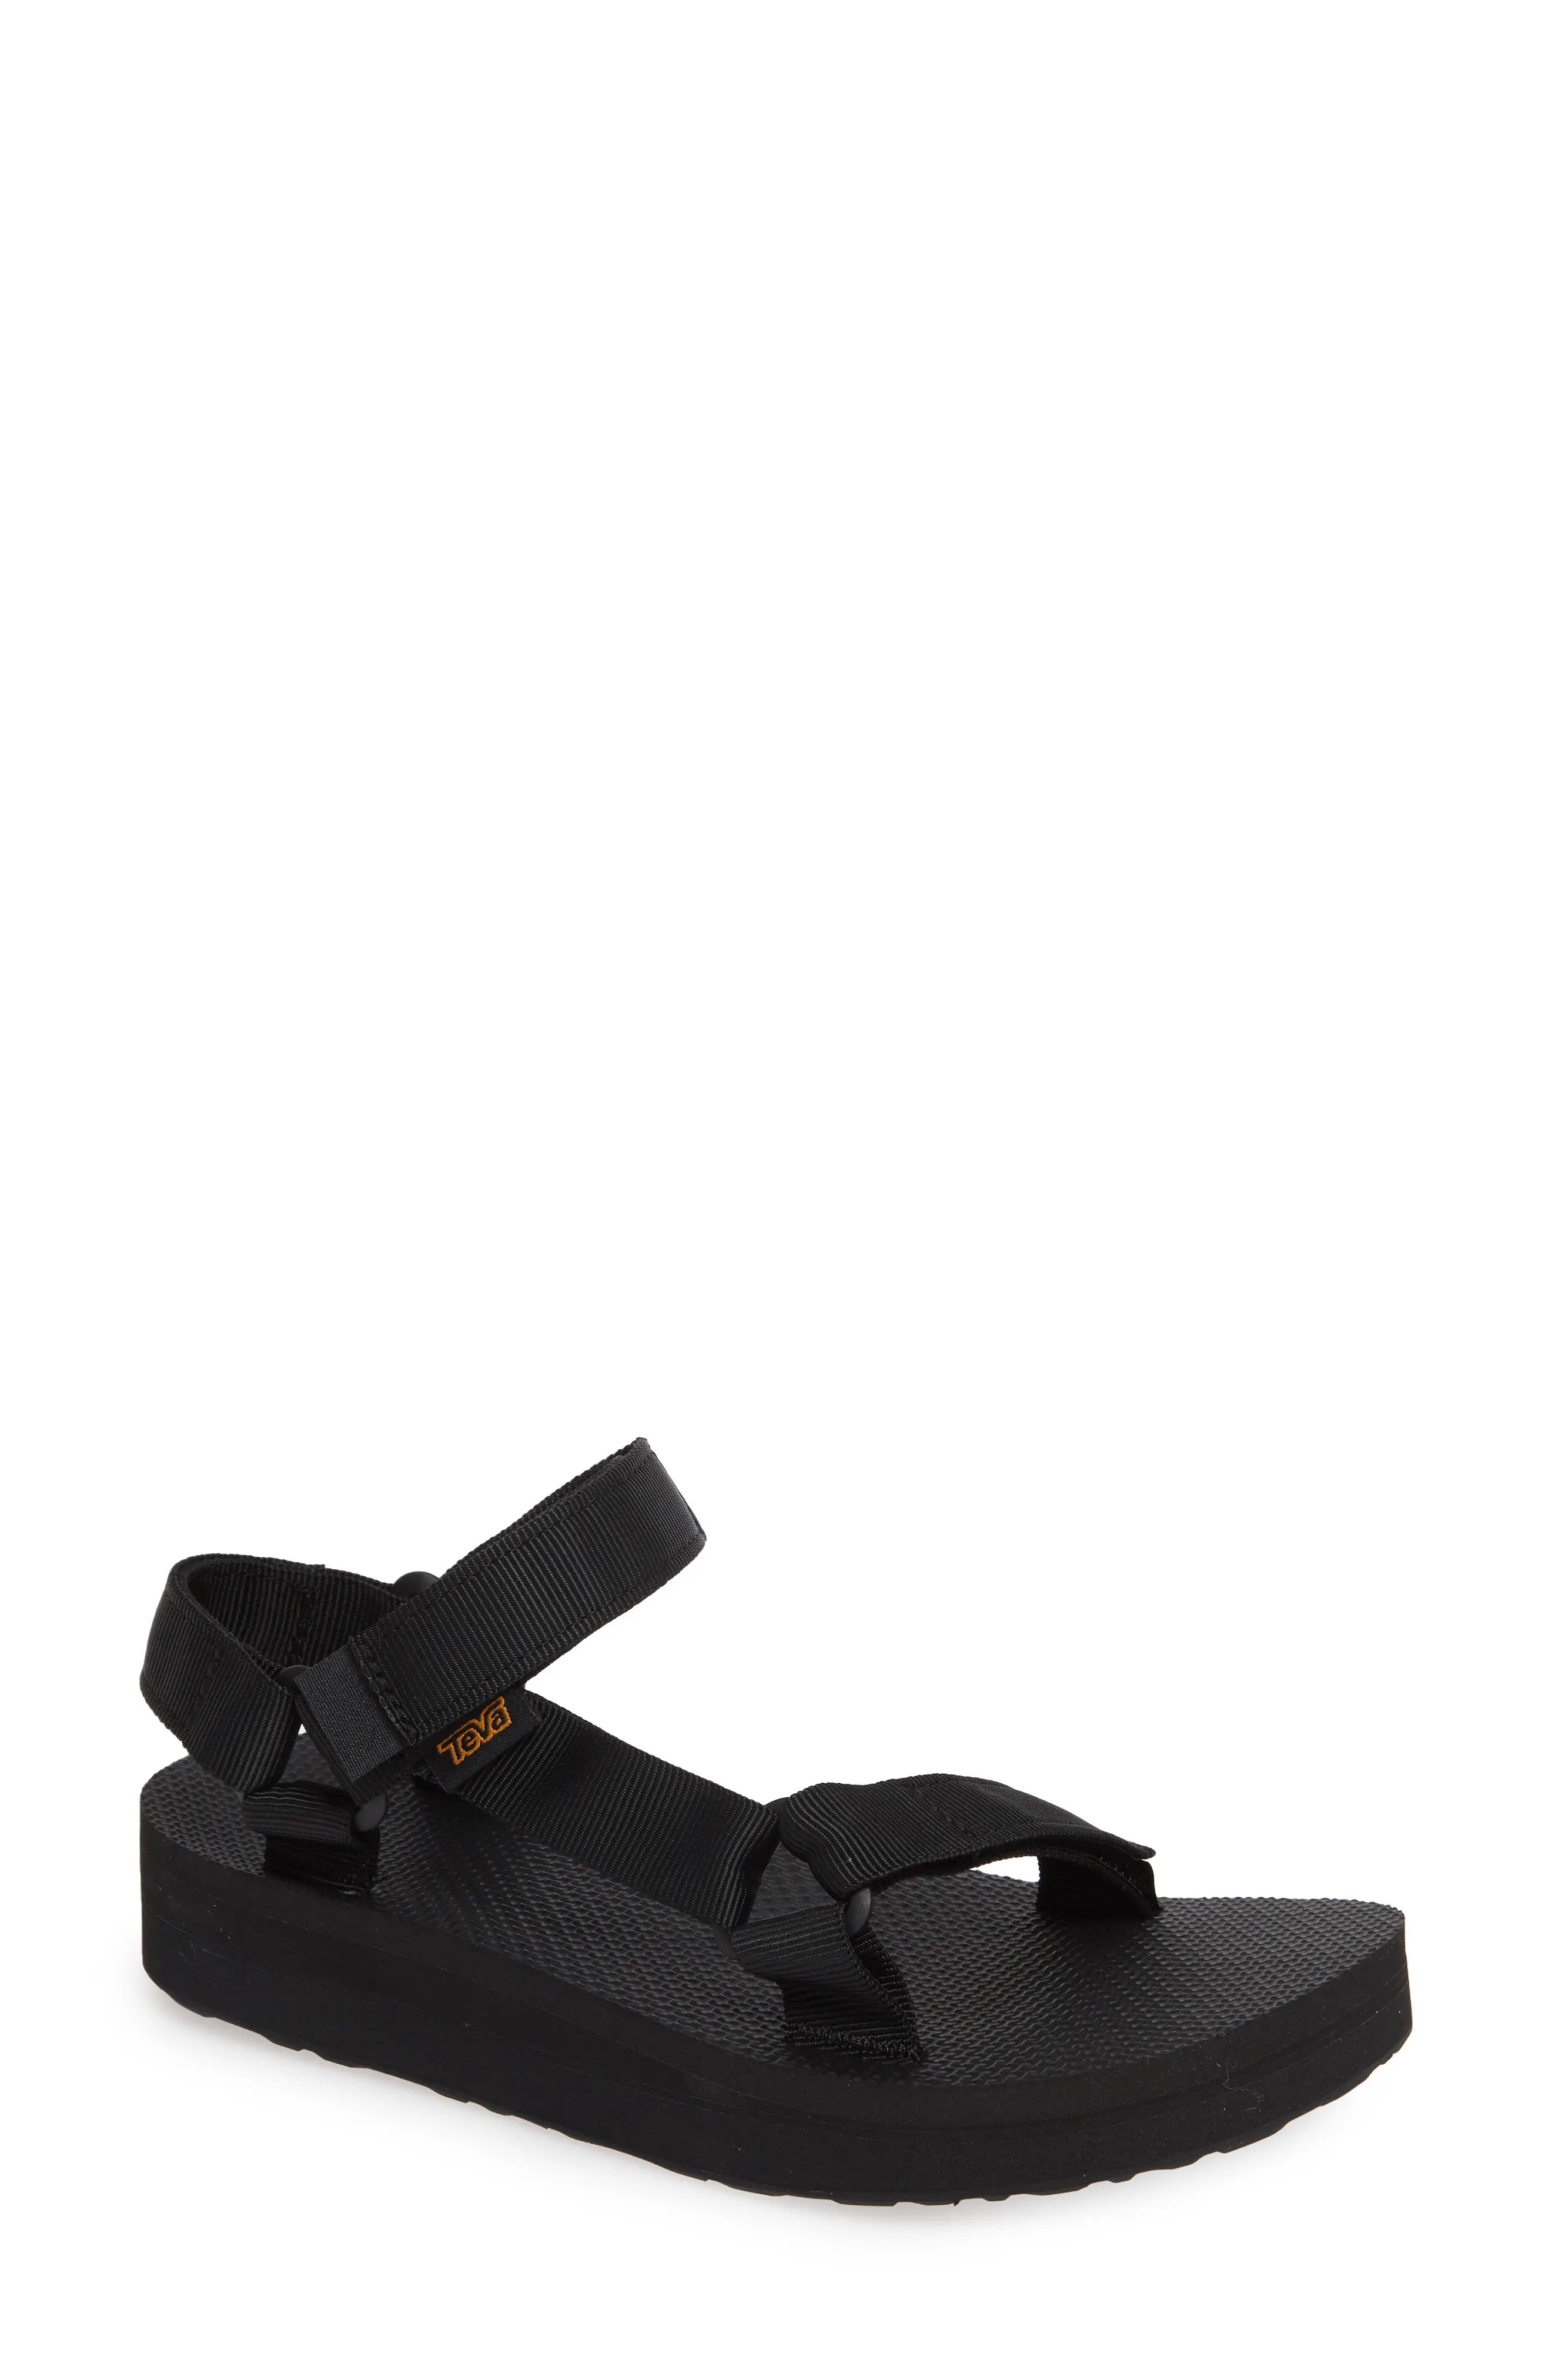 Women's Teva Midform Universal Geometric Sandal, Size 6 M - Black | Nordstrom